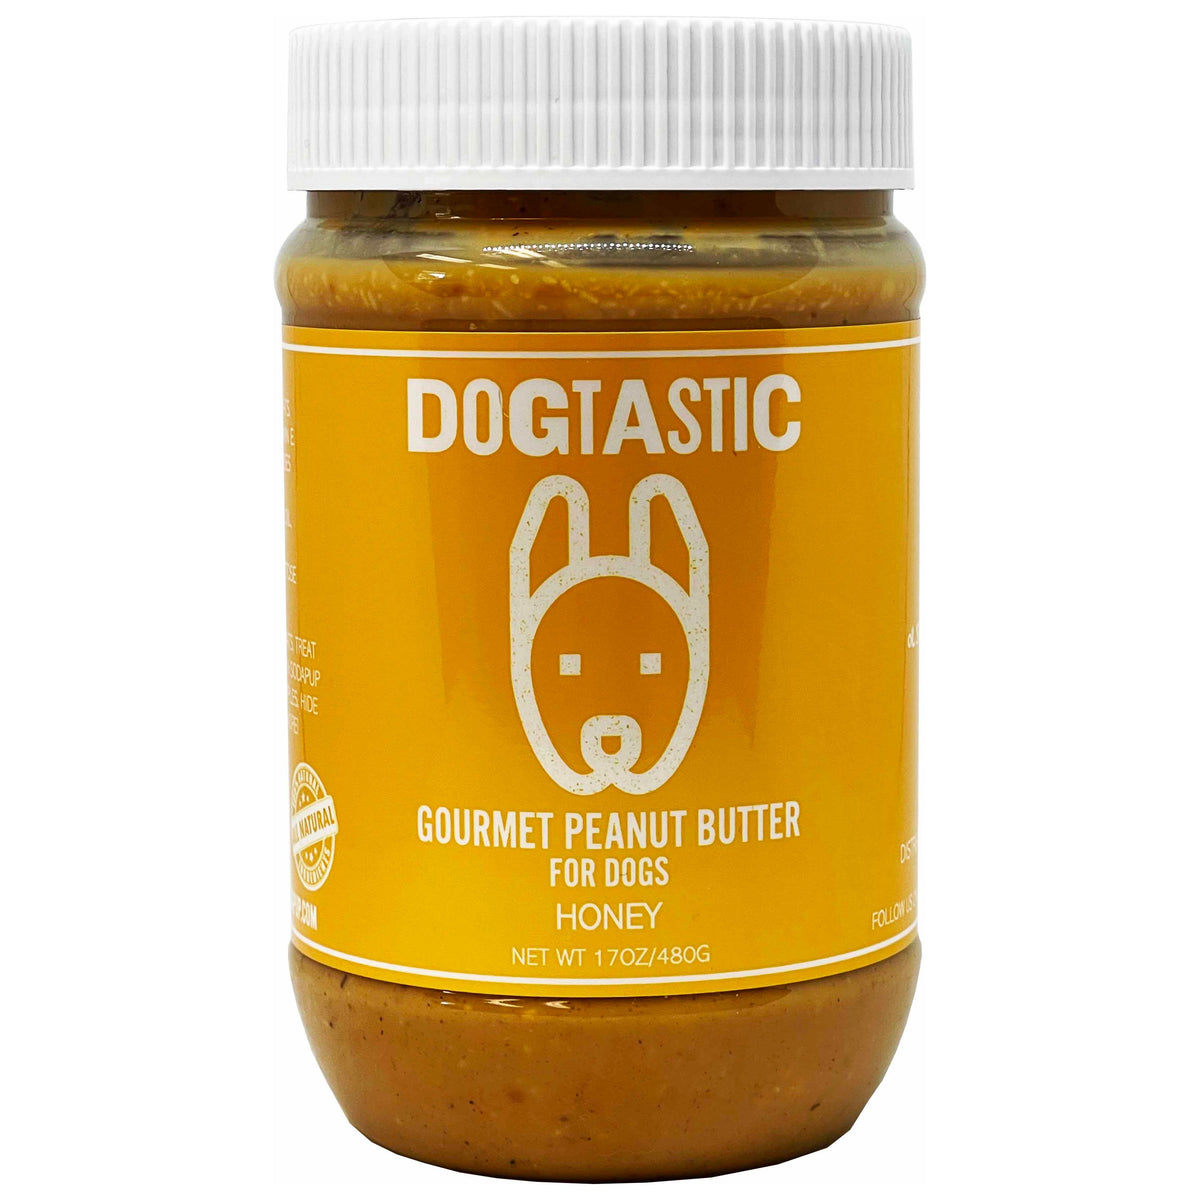 SodaPup/True Dogs, LLC Peanut Butter - Honey Dogtastic Gourmet Peanut Butter for Dogs - Honey Flavor by SodaPup/True Dogs, LLC